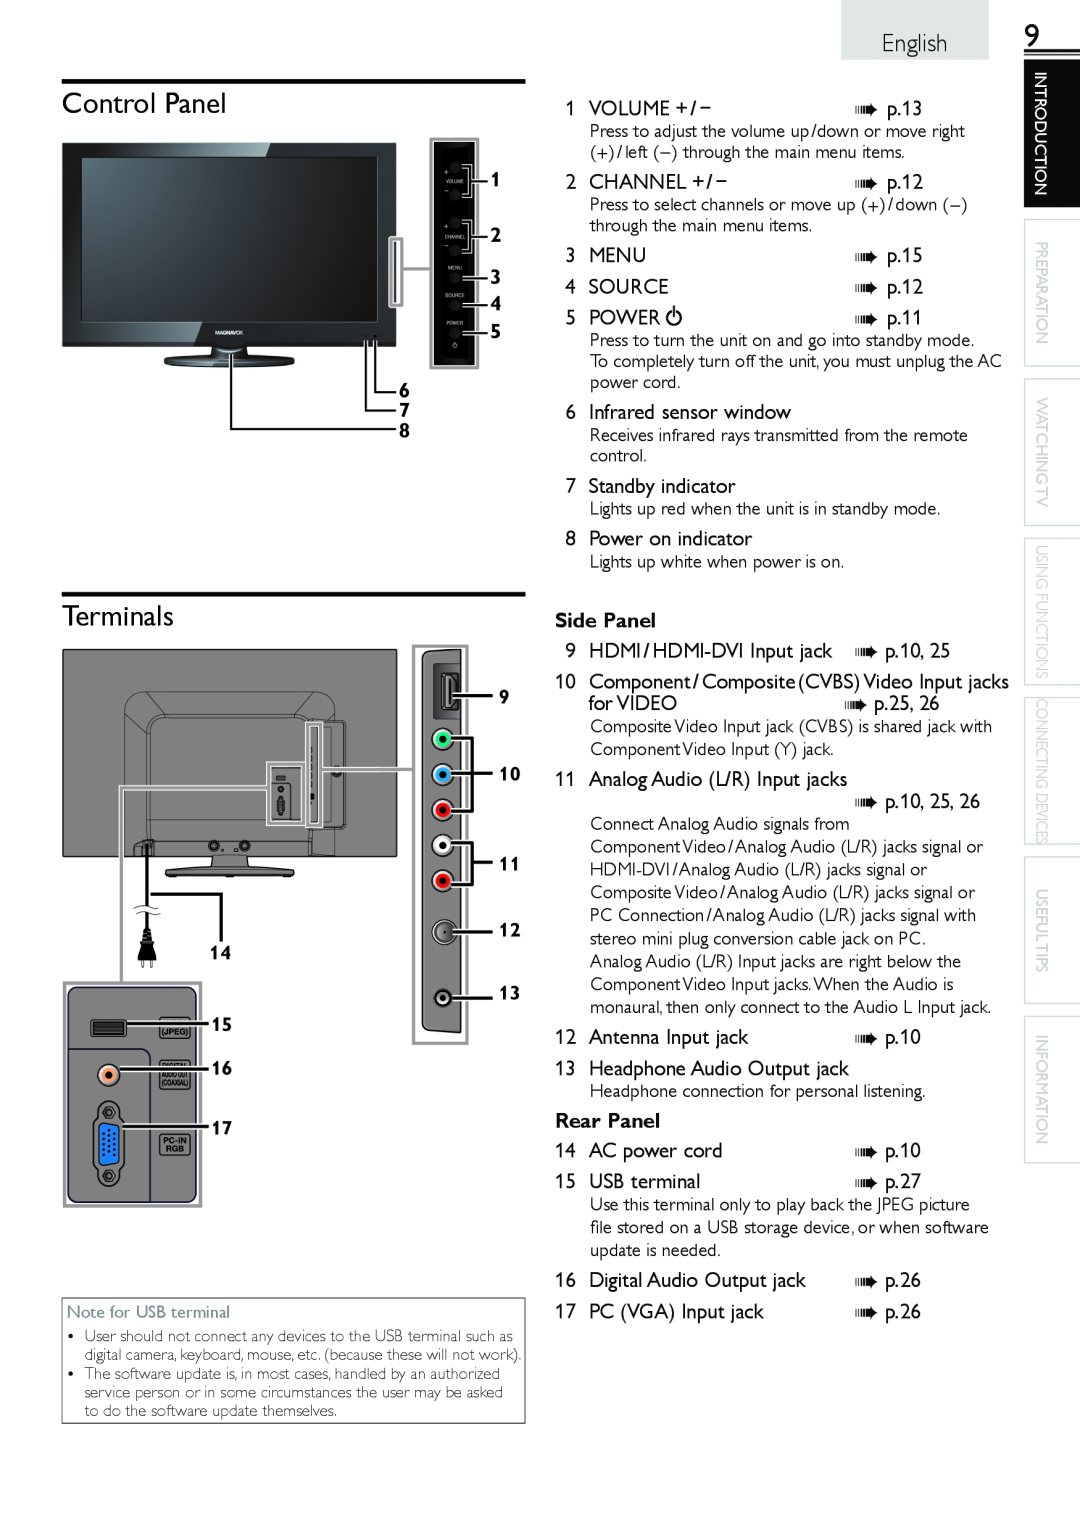 Magnavox 19ME601B, 1-866-341-3738 owner manual Control Panel, Terminals, Side Panel, Rear Panel, English 